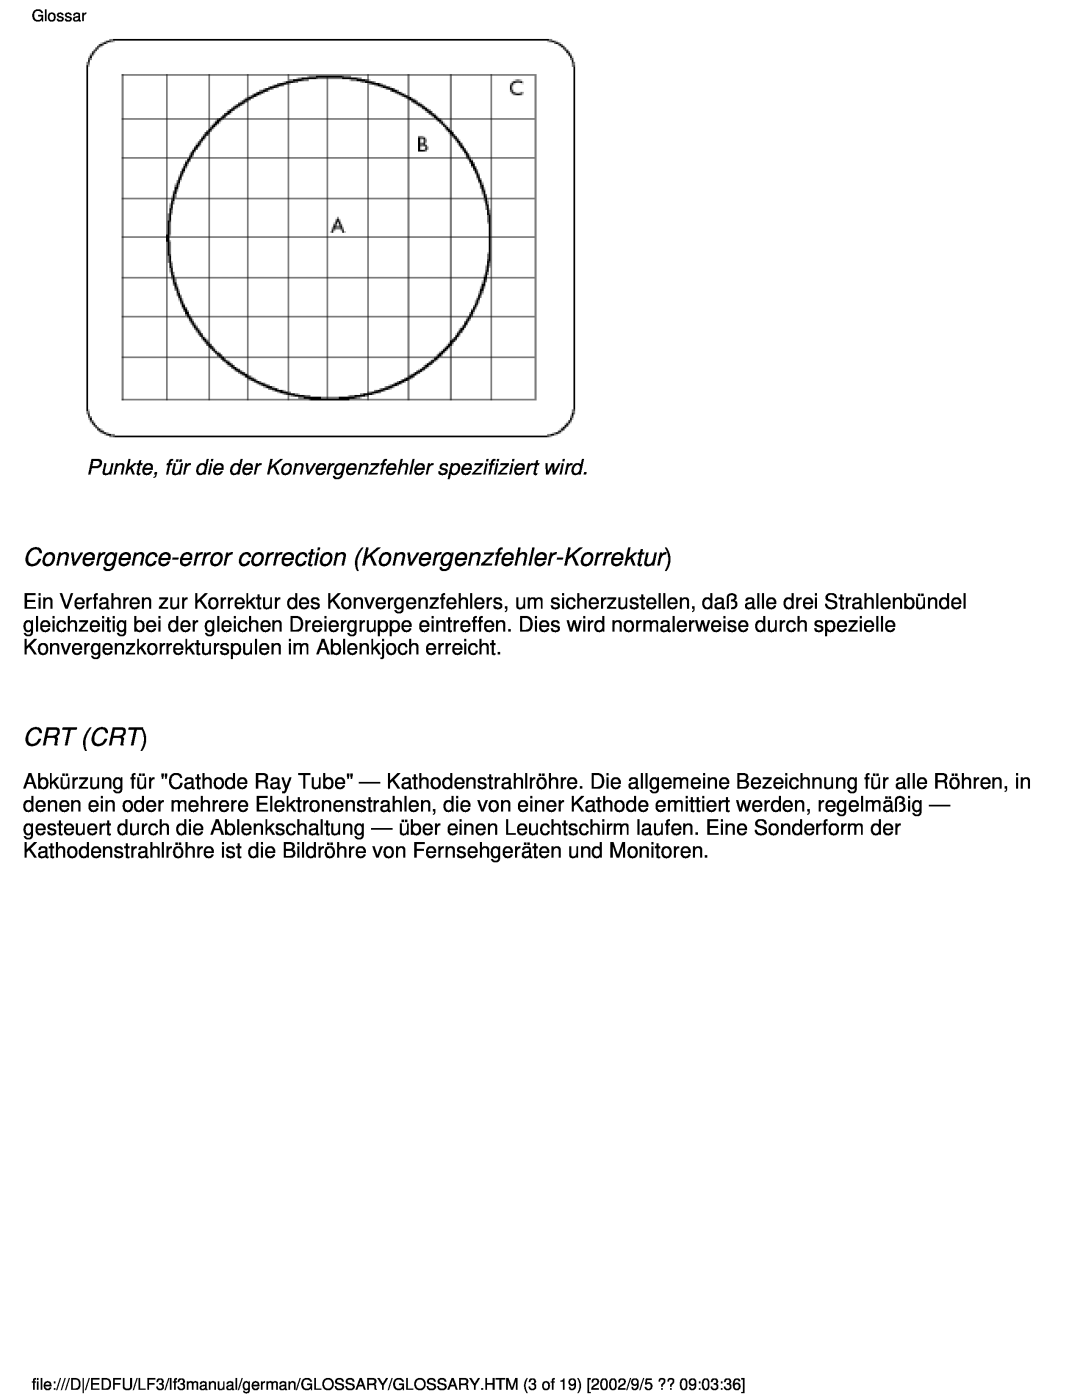 Philips 107E user manual Convergence-error correction Konvergenzfehler-Korrektur, Crt Crt 